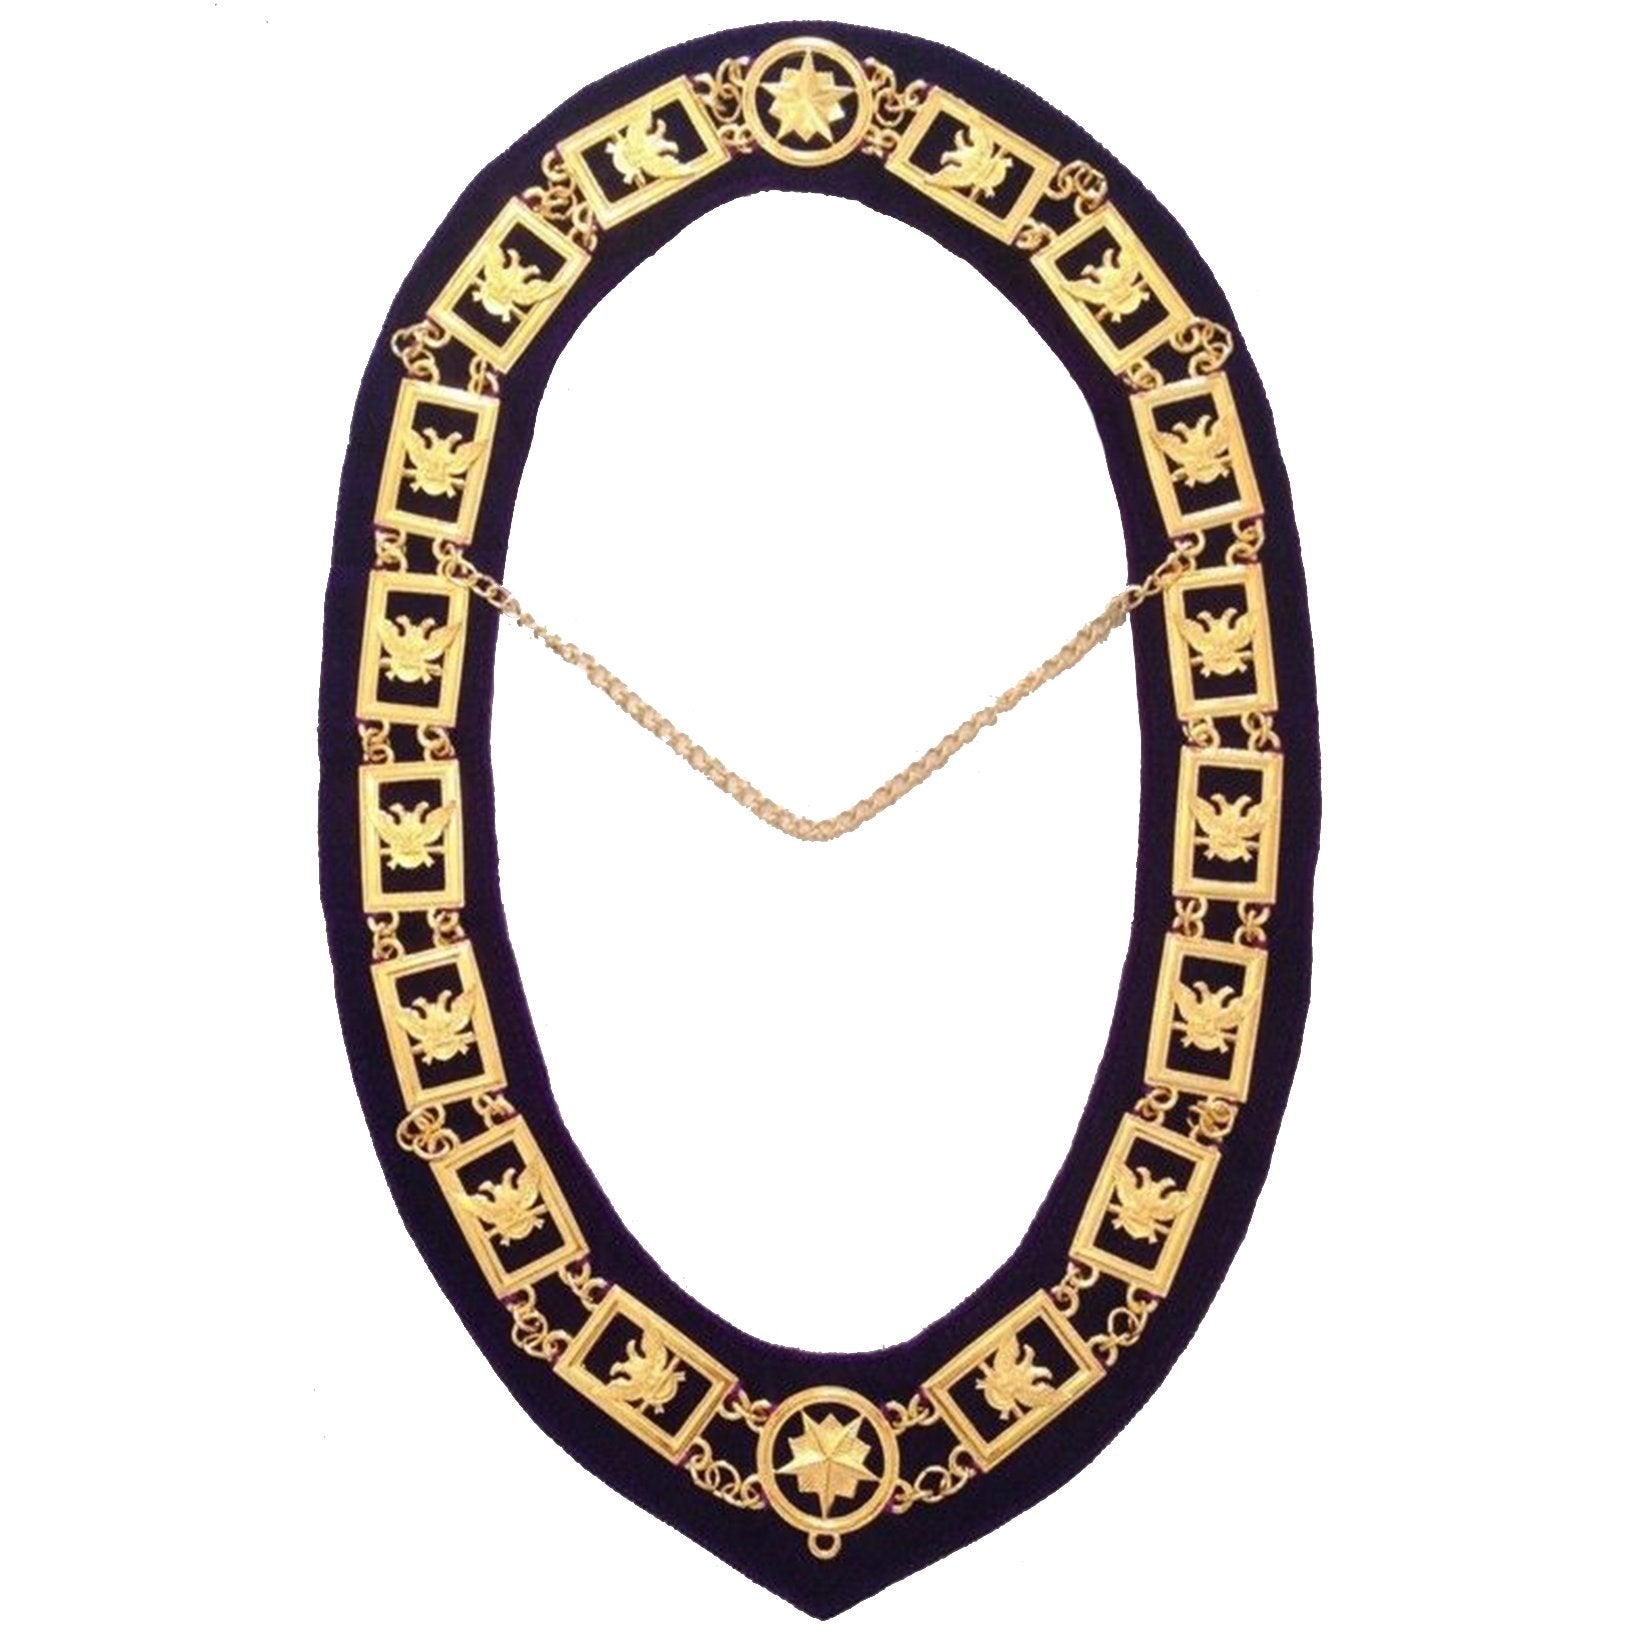 32nd Degree Scottish Rite Chain Collar - Wings Up Gold Plated - Bricks Masons